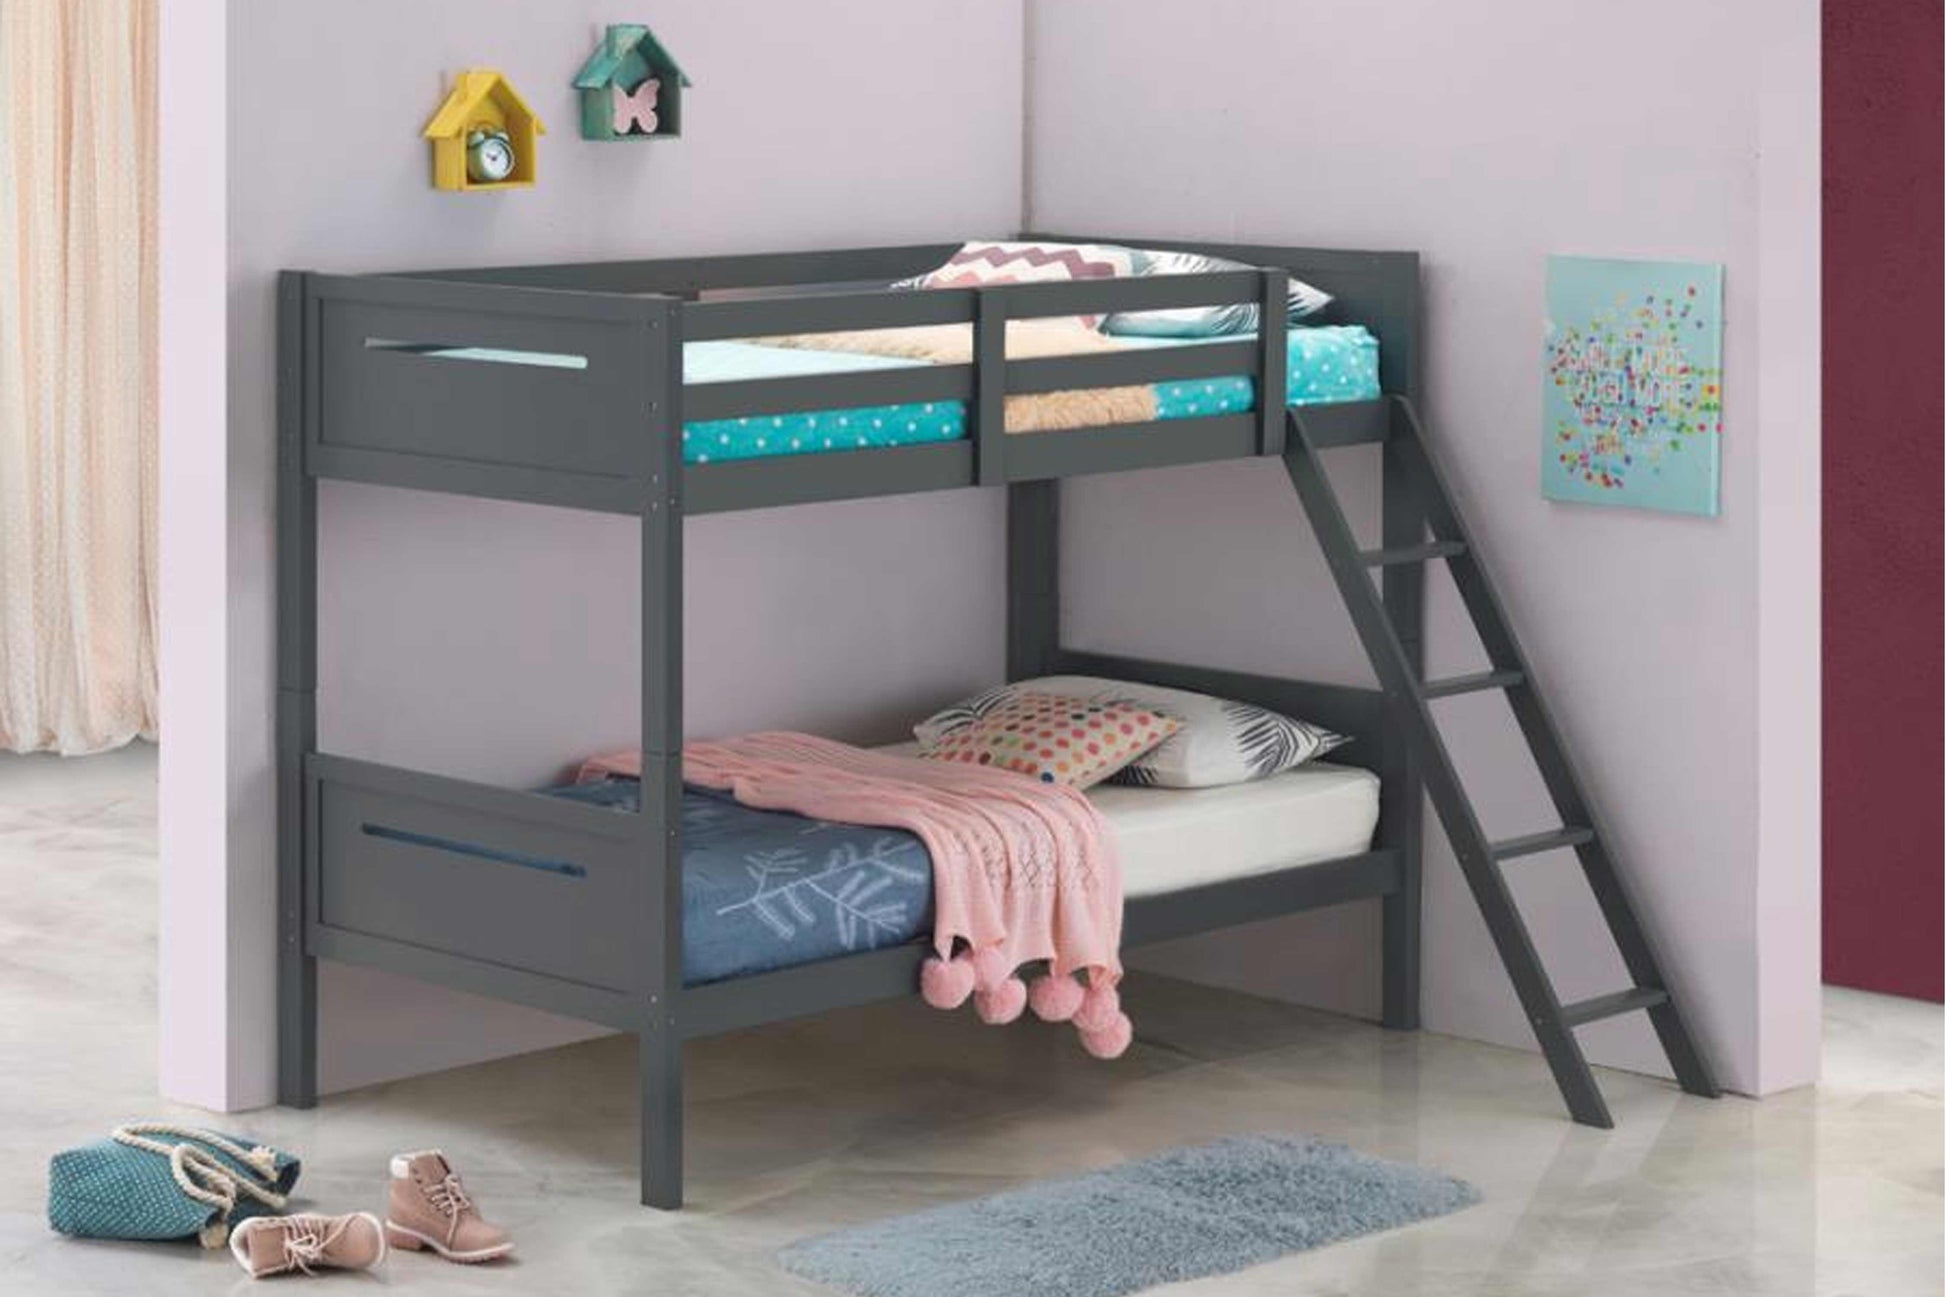 TWIN / FULL BUNK BED MODEL 405051 - Venini Furniture 